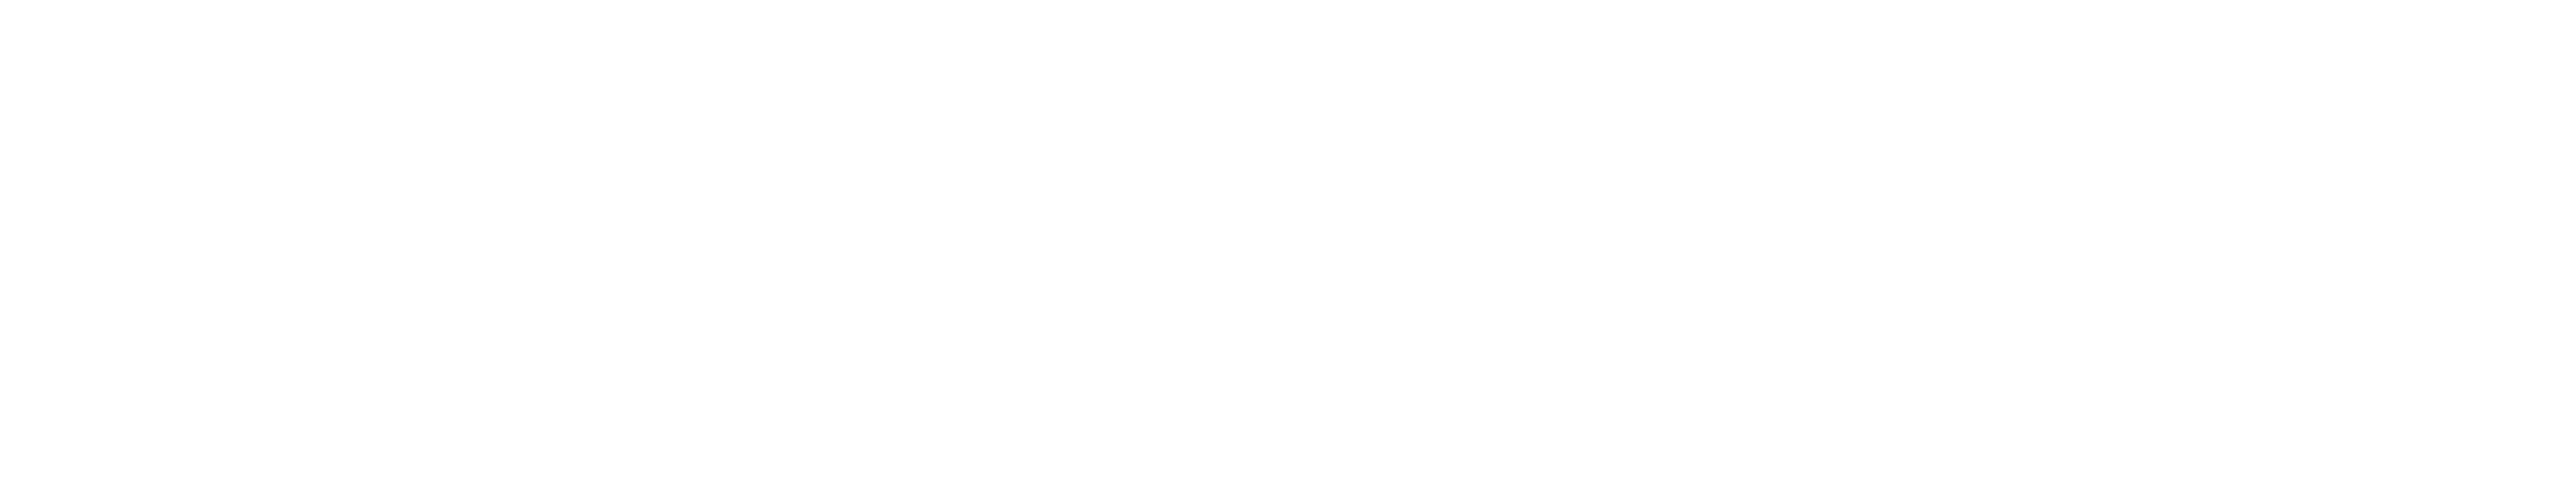 FRANK J RYAN FINANCIAL SERVICES